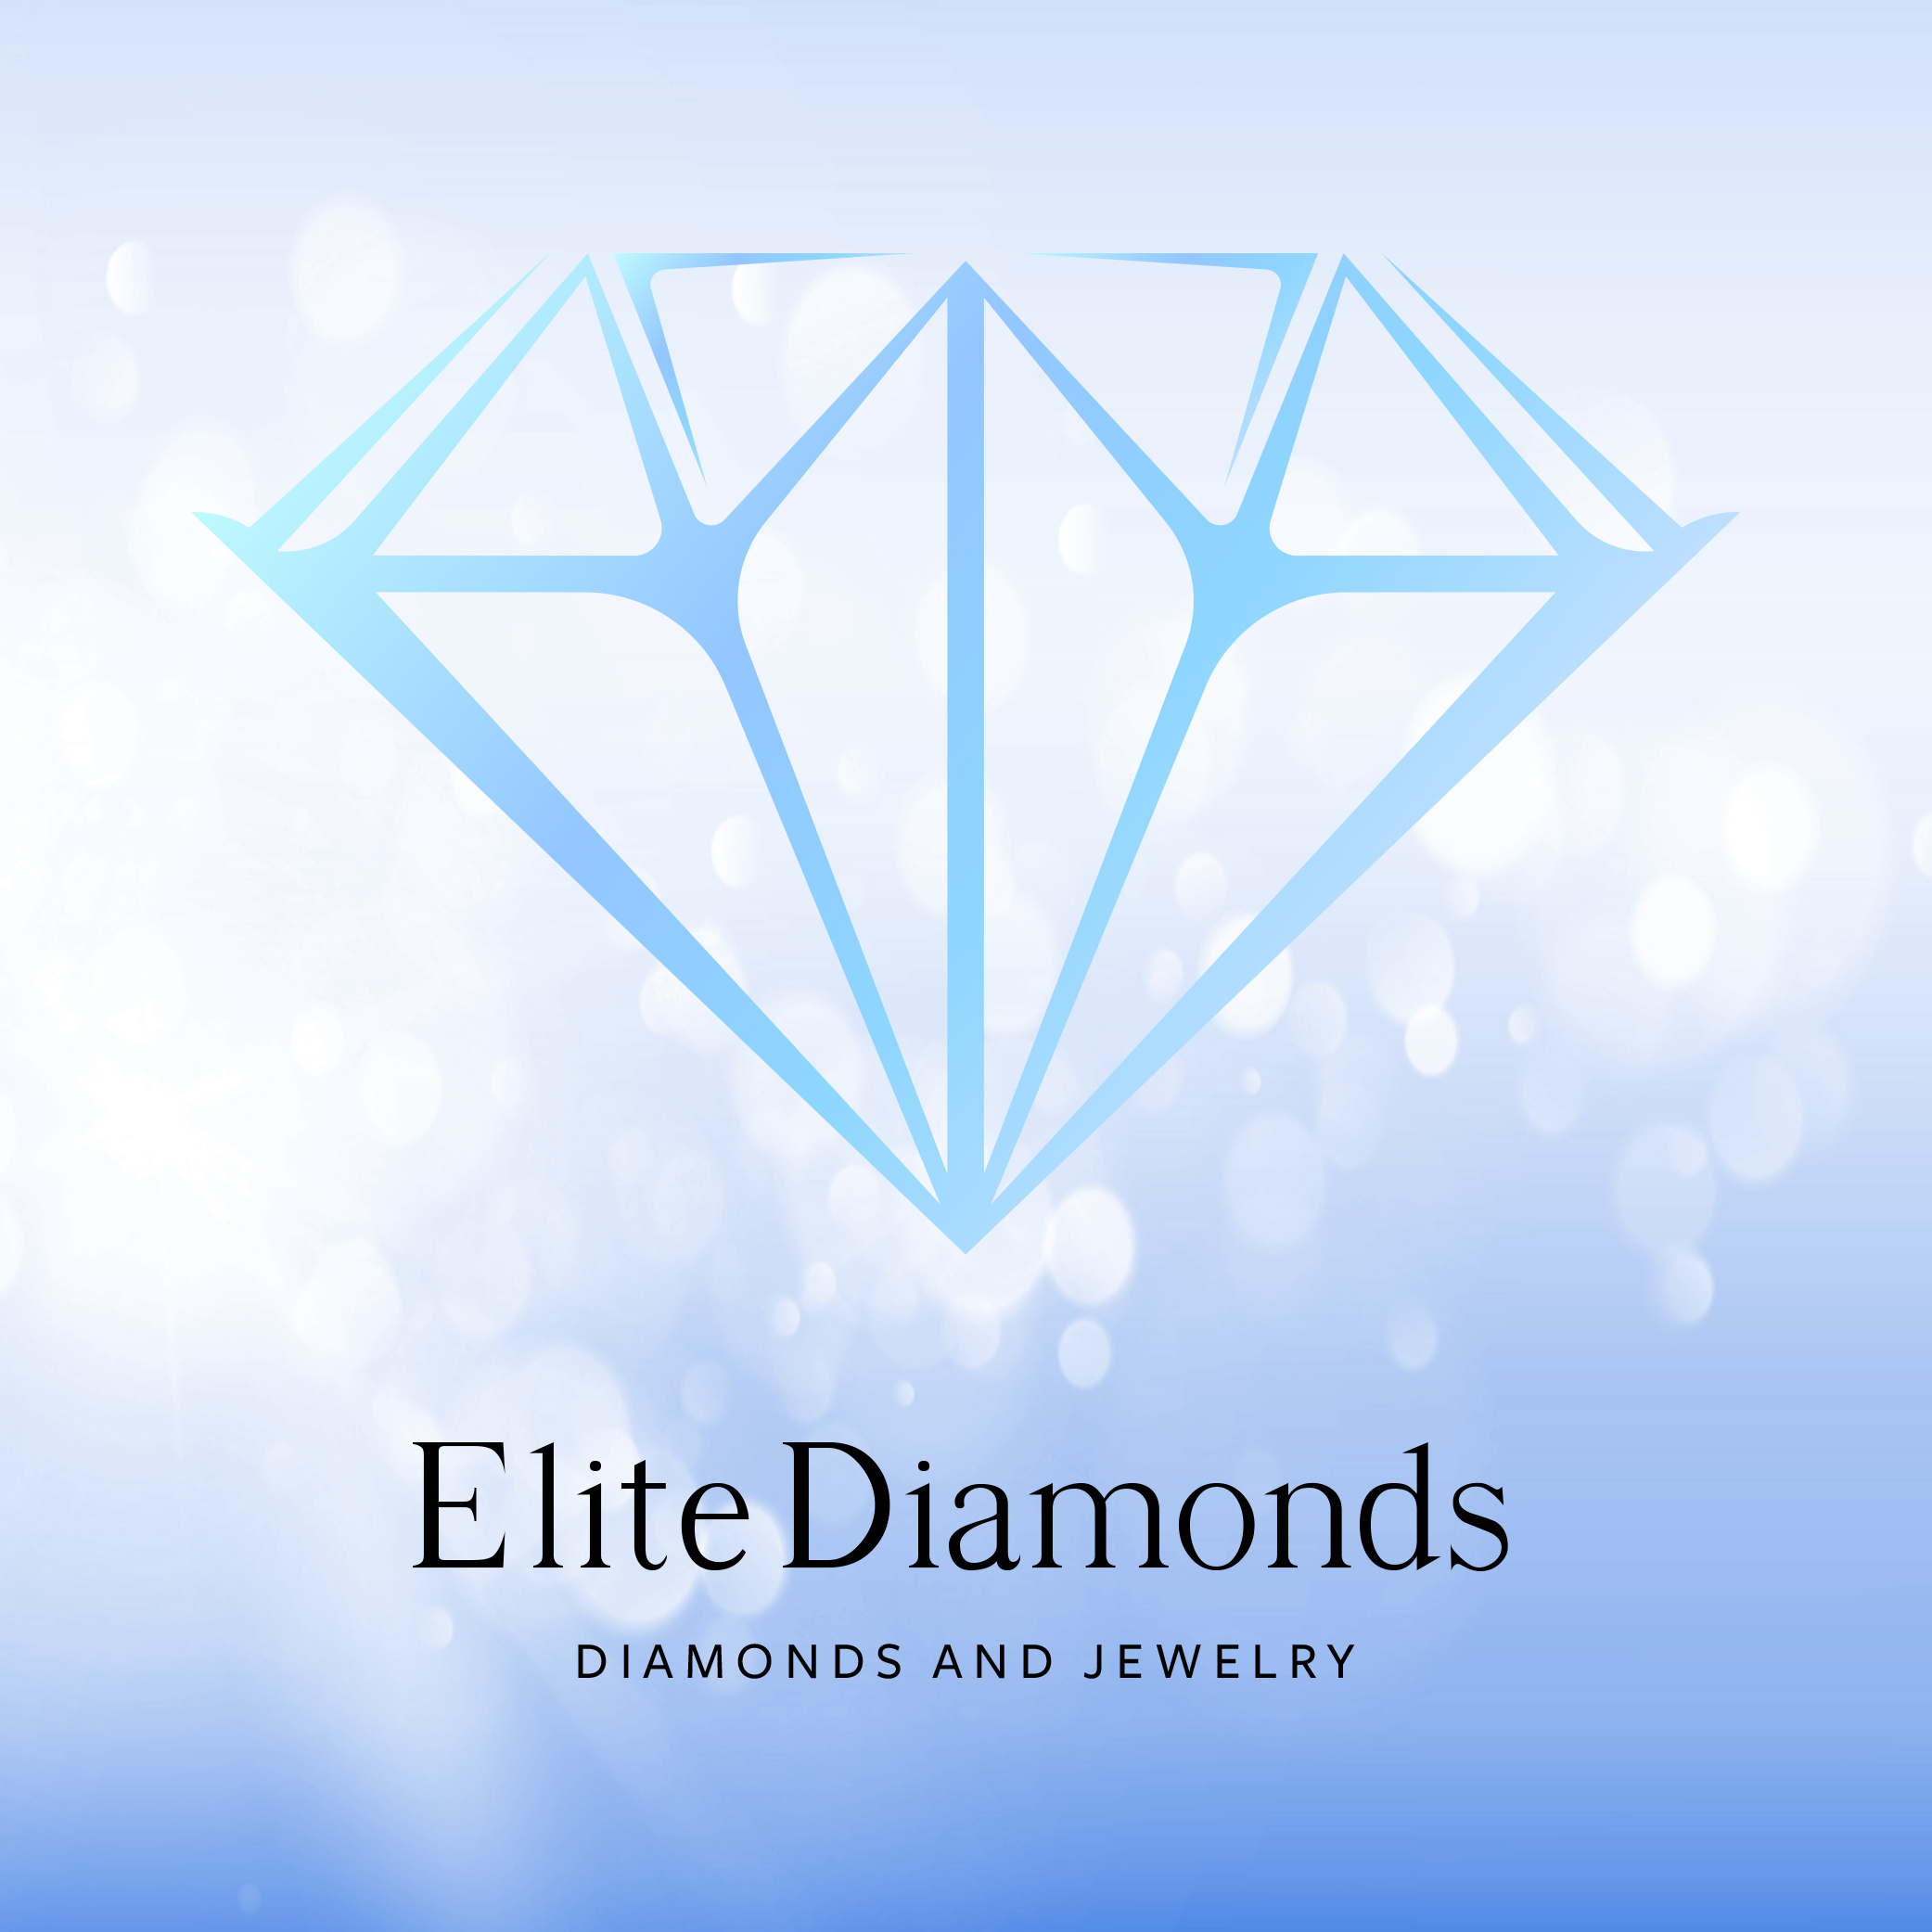 Elite Diamonds & Jewelry